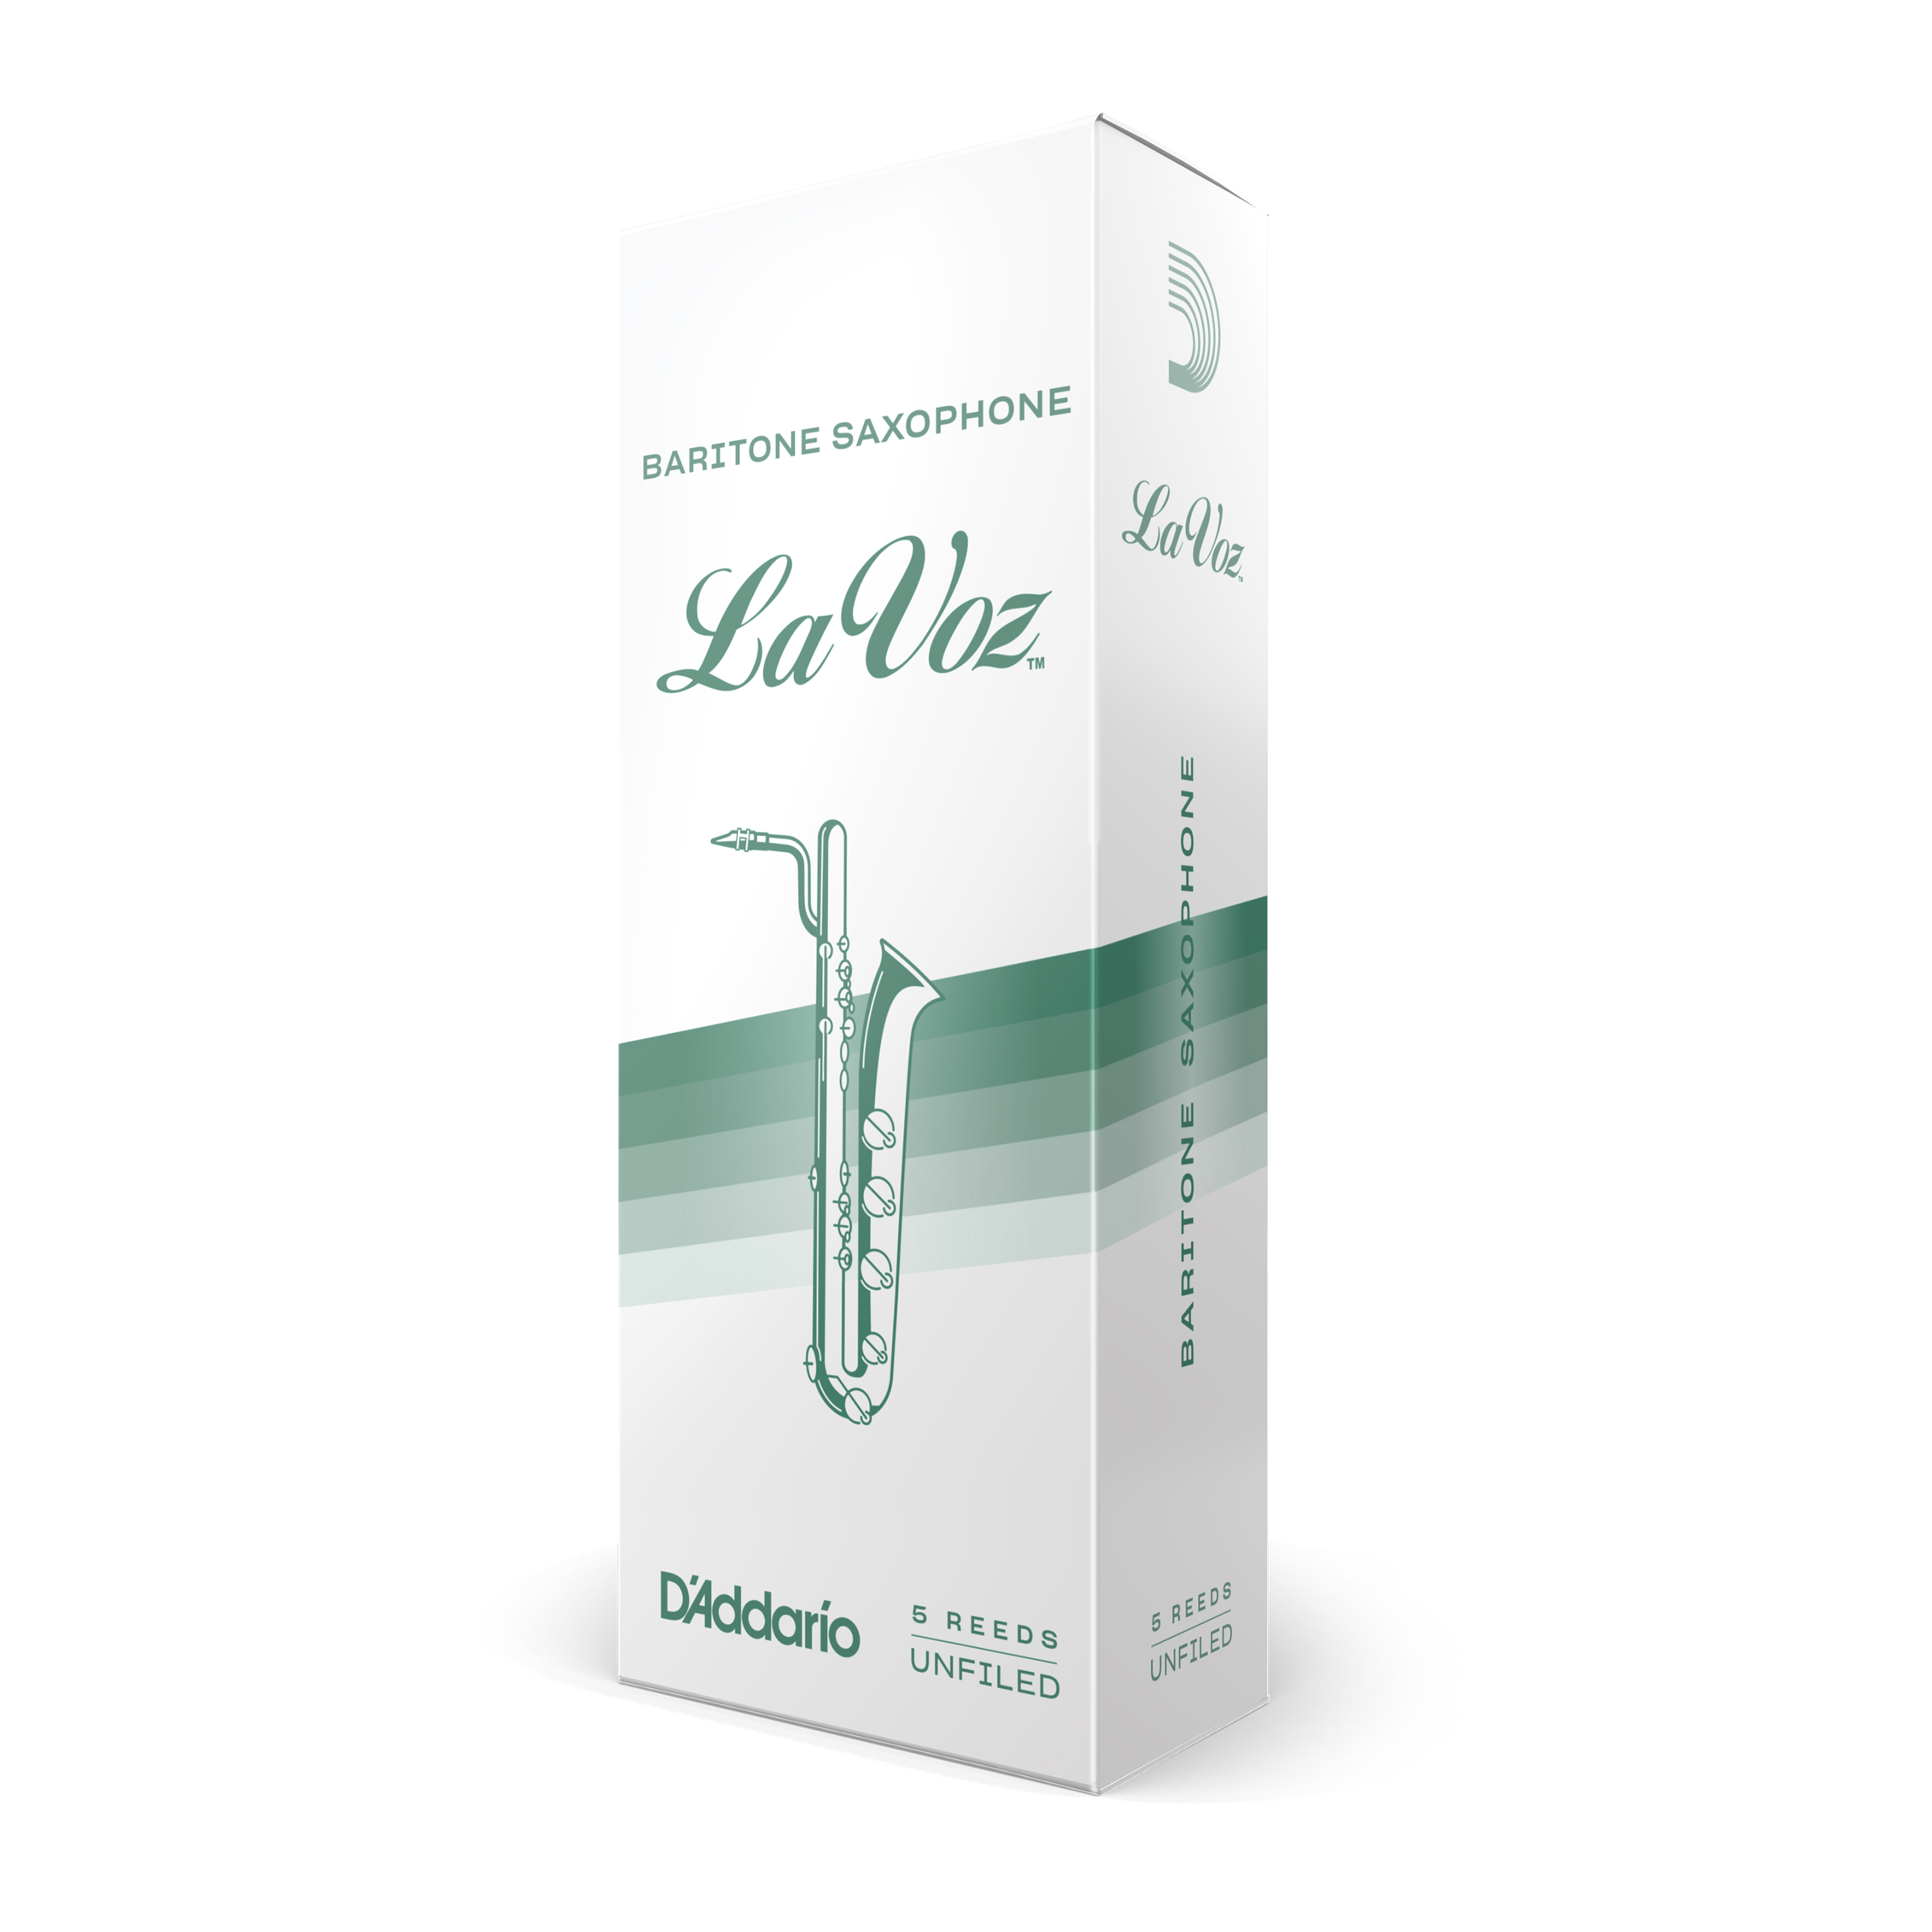 box of five LaVoz Baritone Saxophone Reeds- Strength Medium